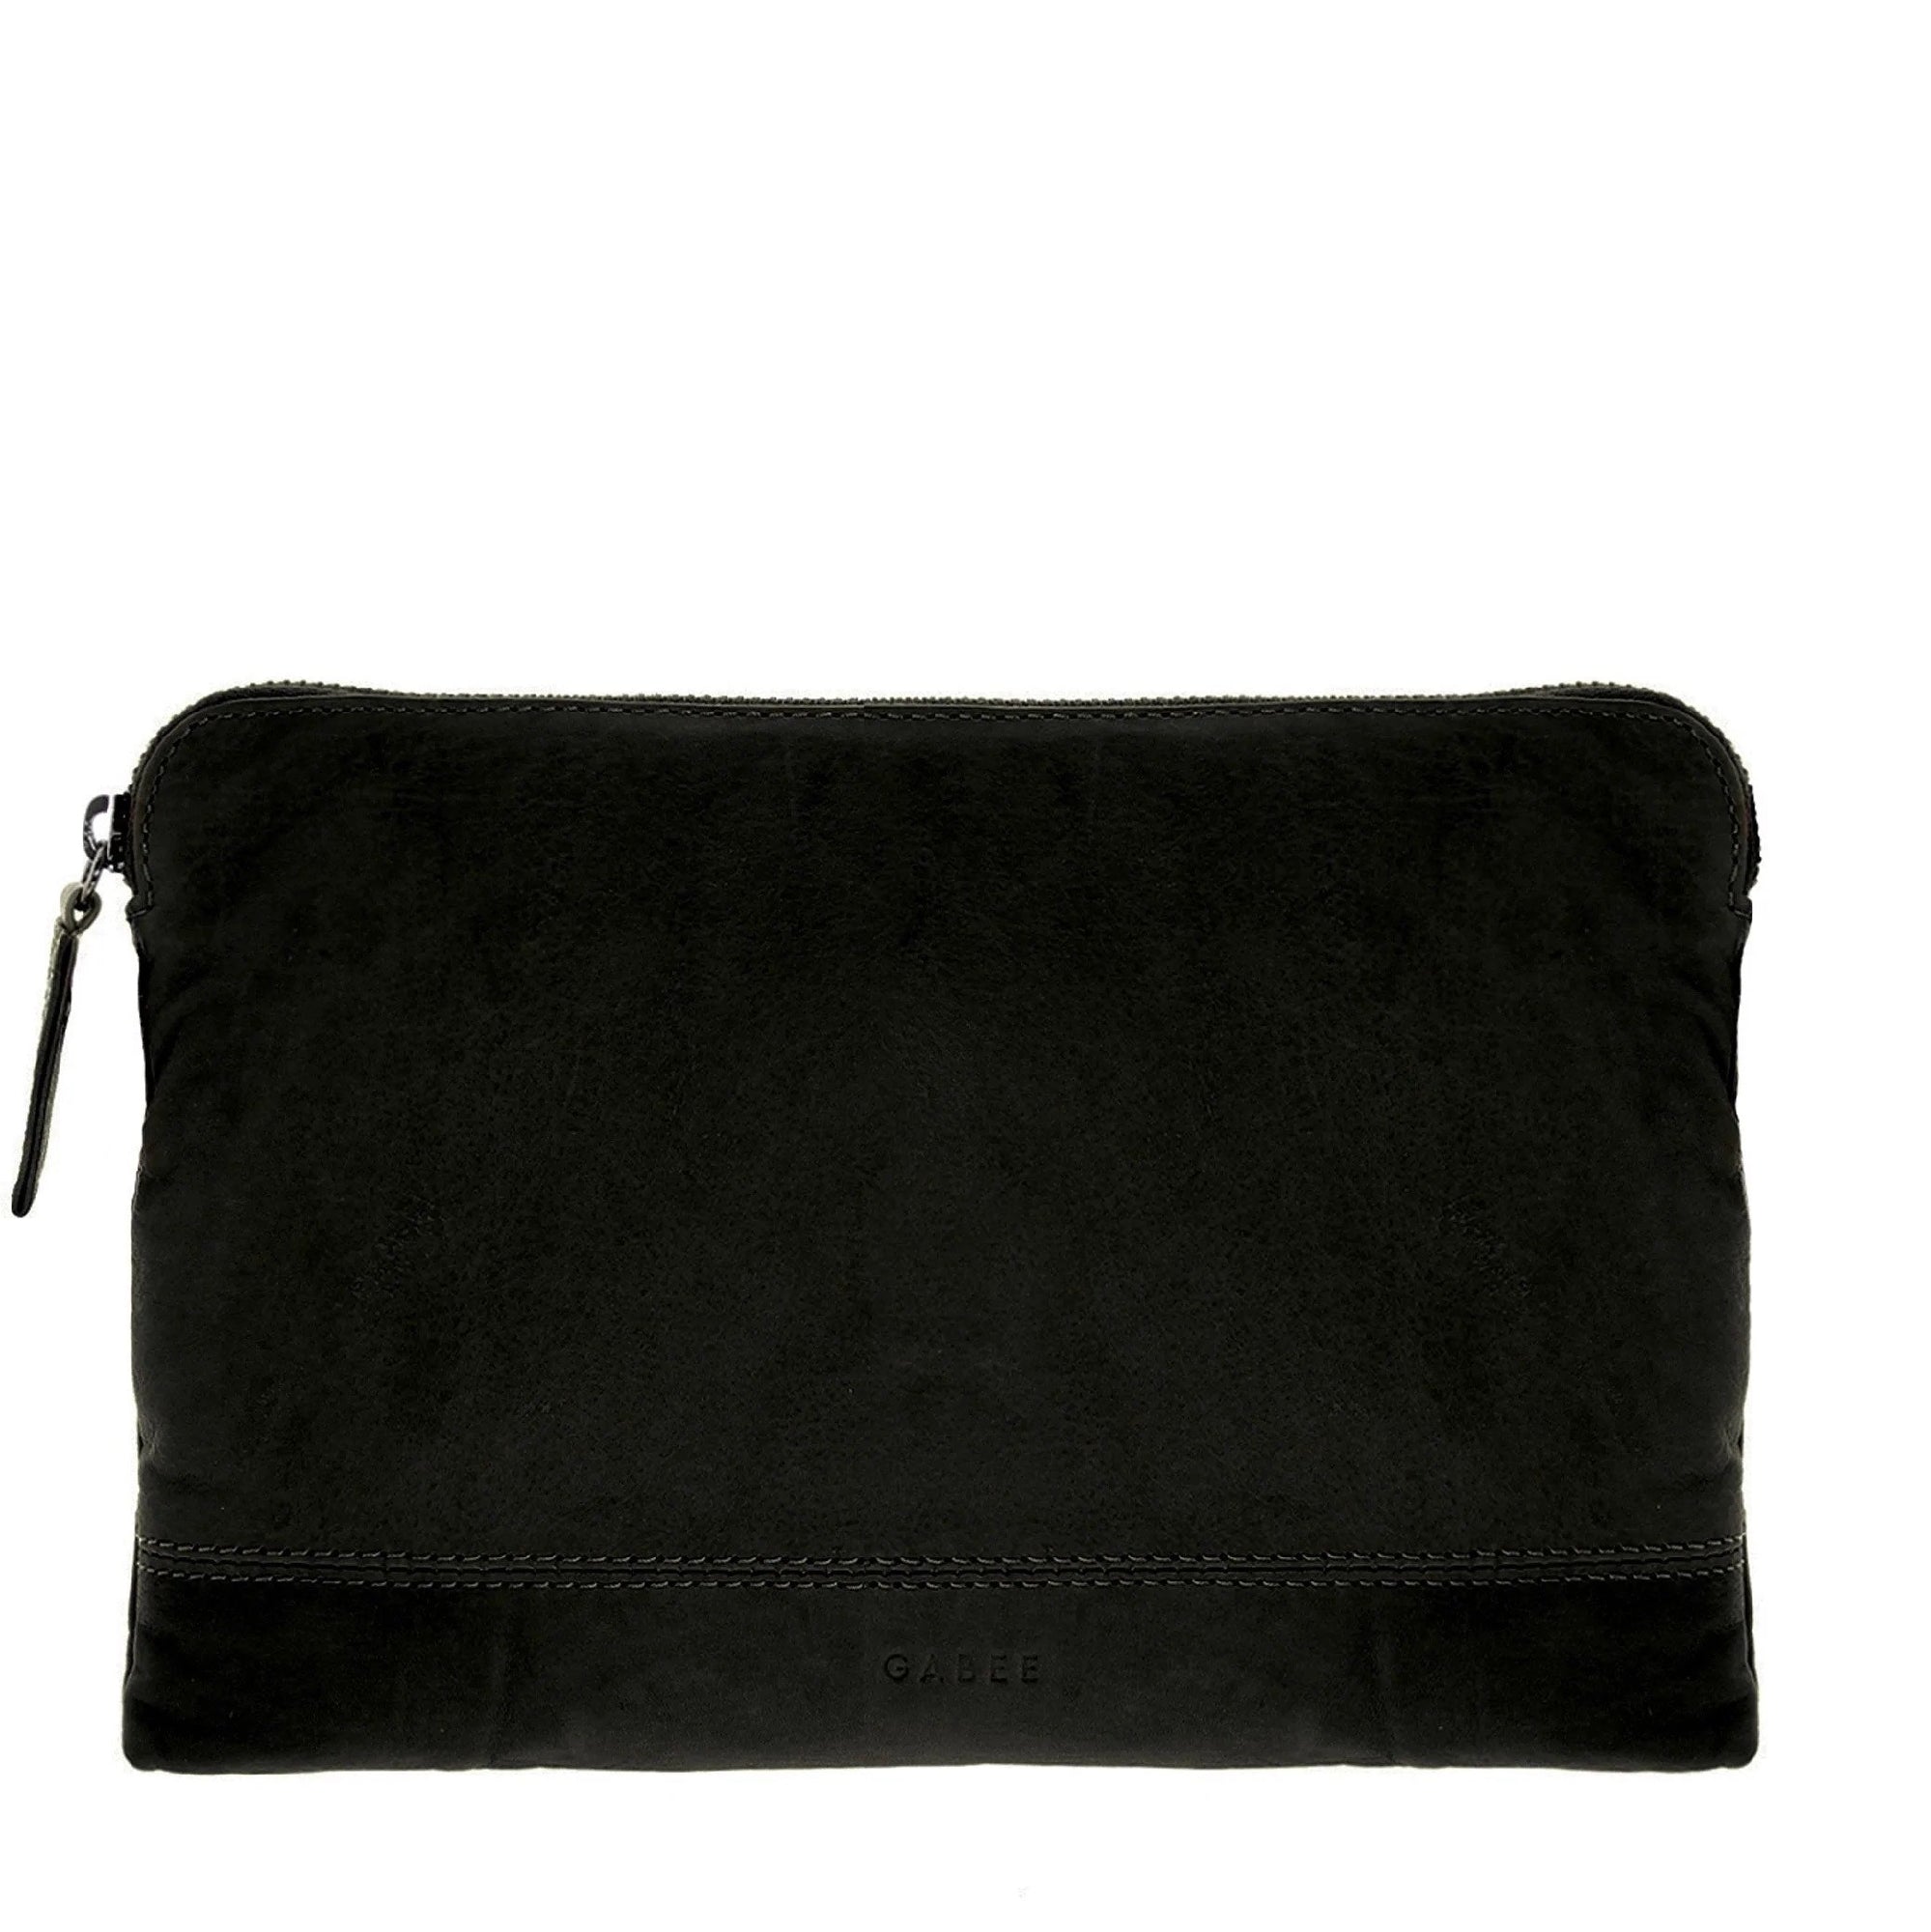 Gabee Amara Small Leather Pouch [COLOUR:Black]